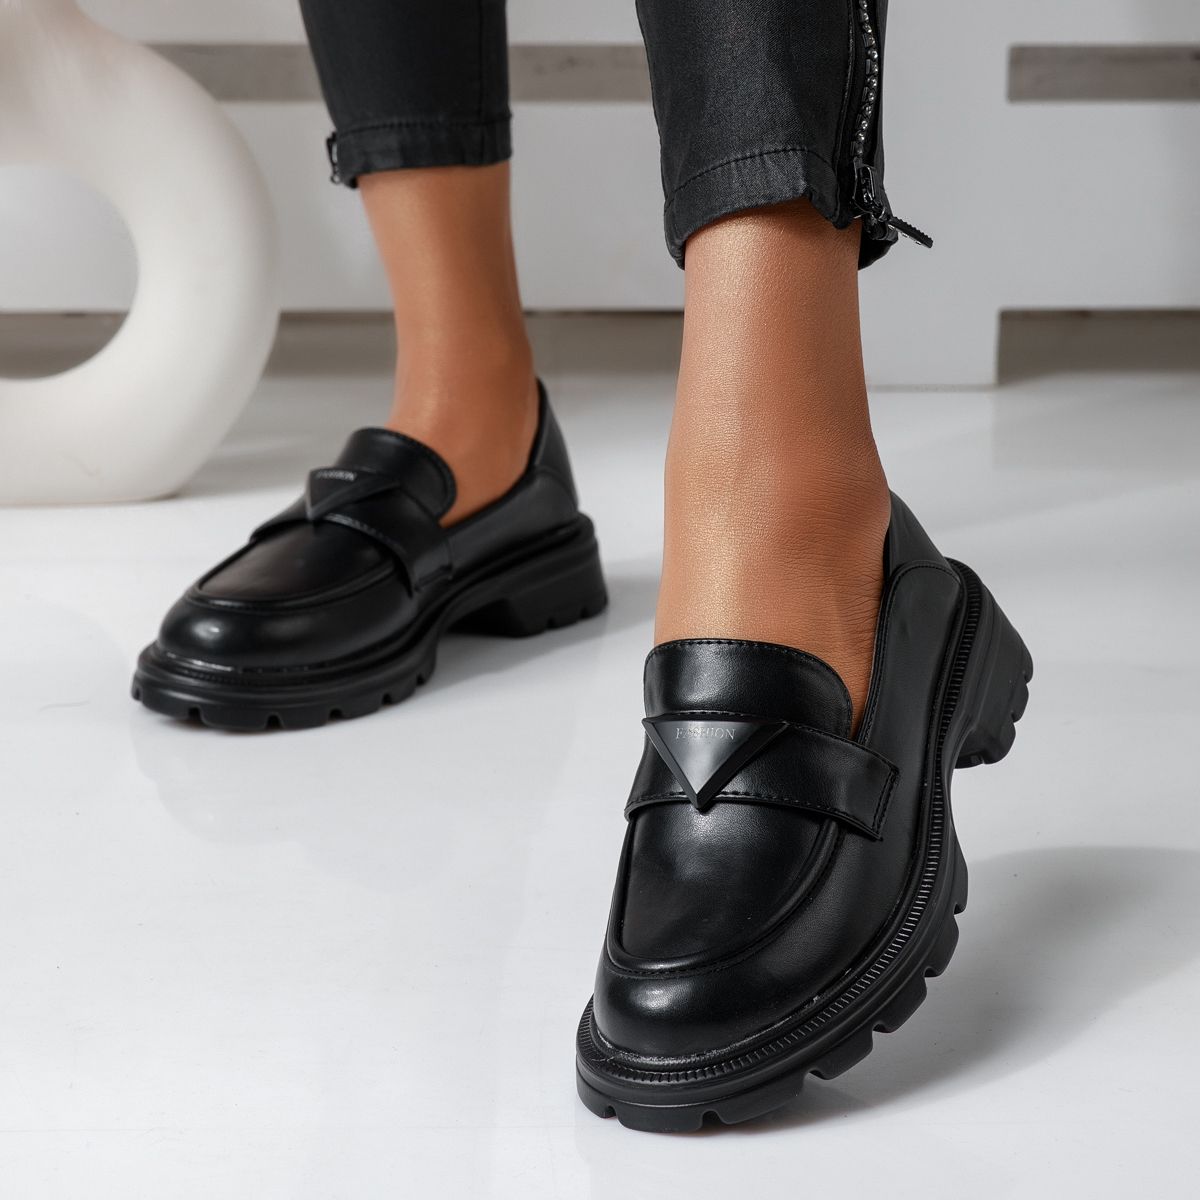 Pantofi Casual Dama Chloe Negri #16453